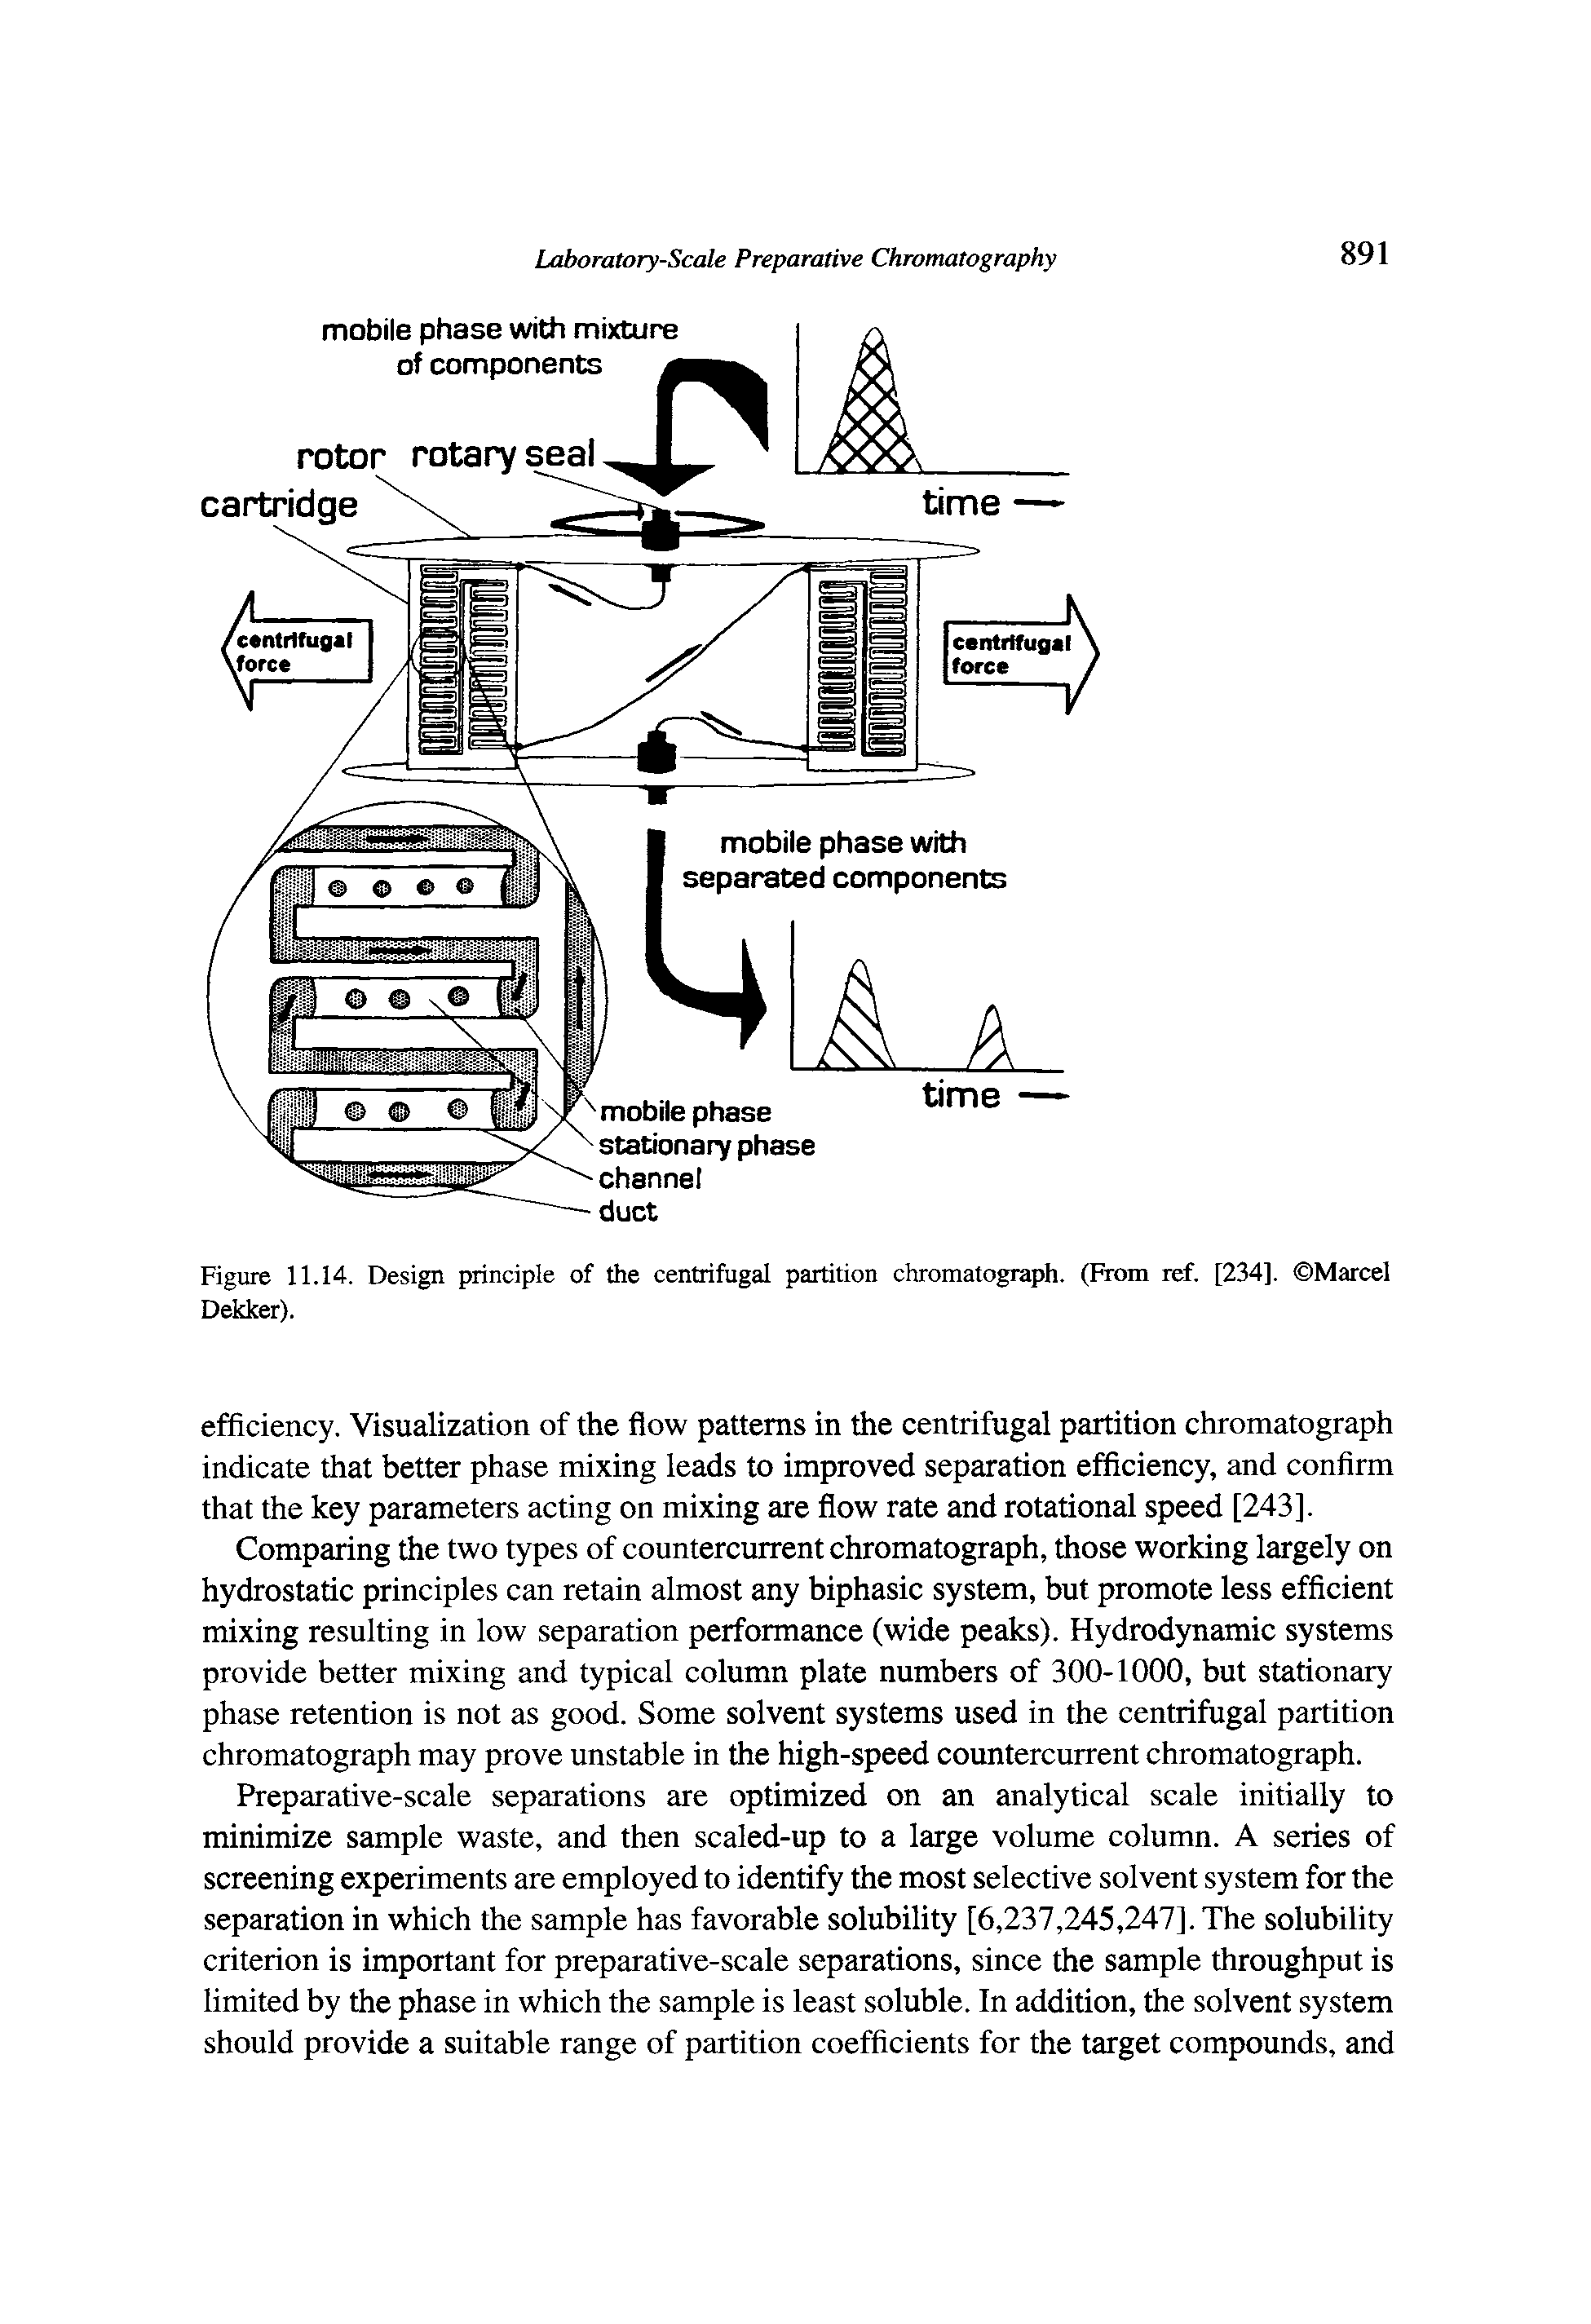 Figure 11.14. Design principle of the centrifugal partition chromatograph. (From ref. [234]. Marcel Dekker).